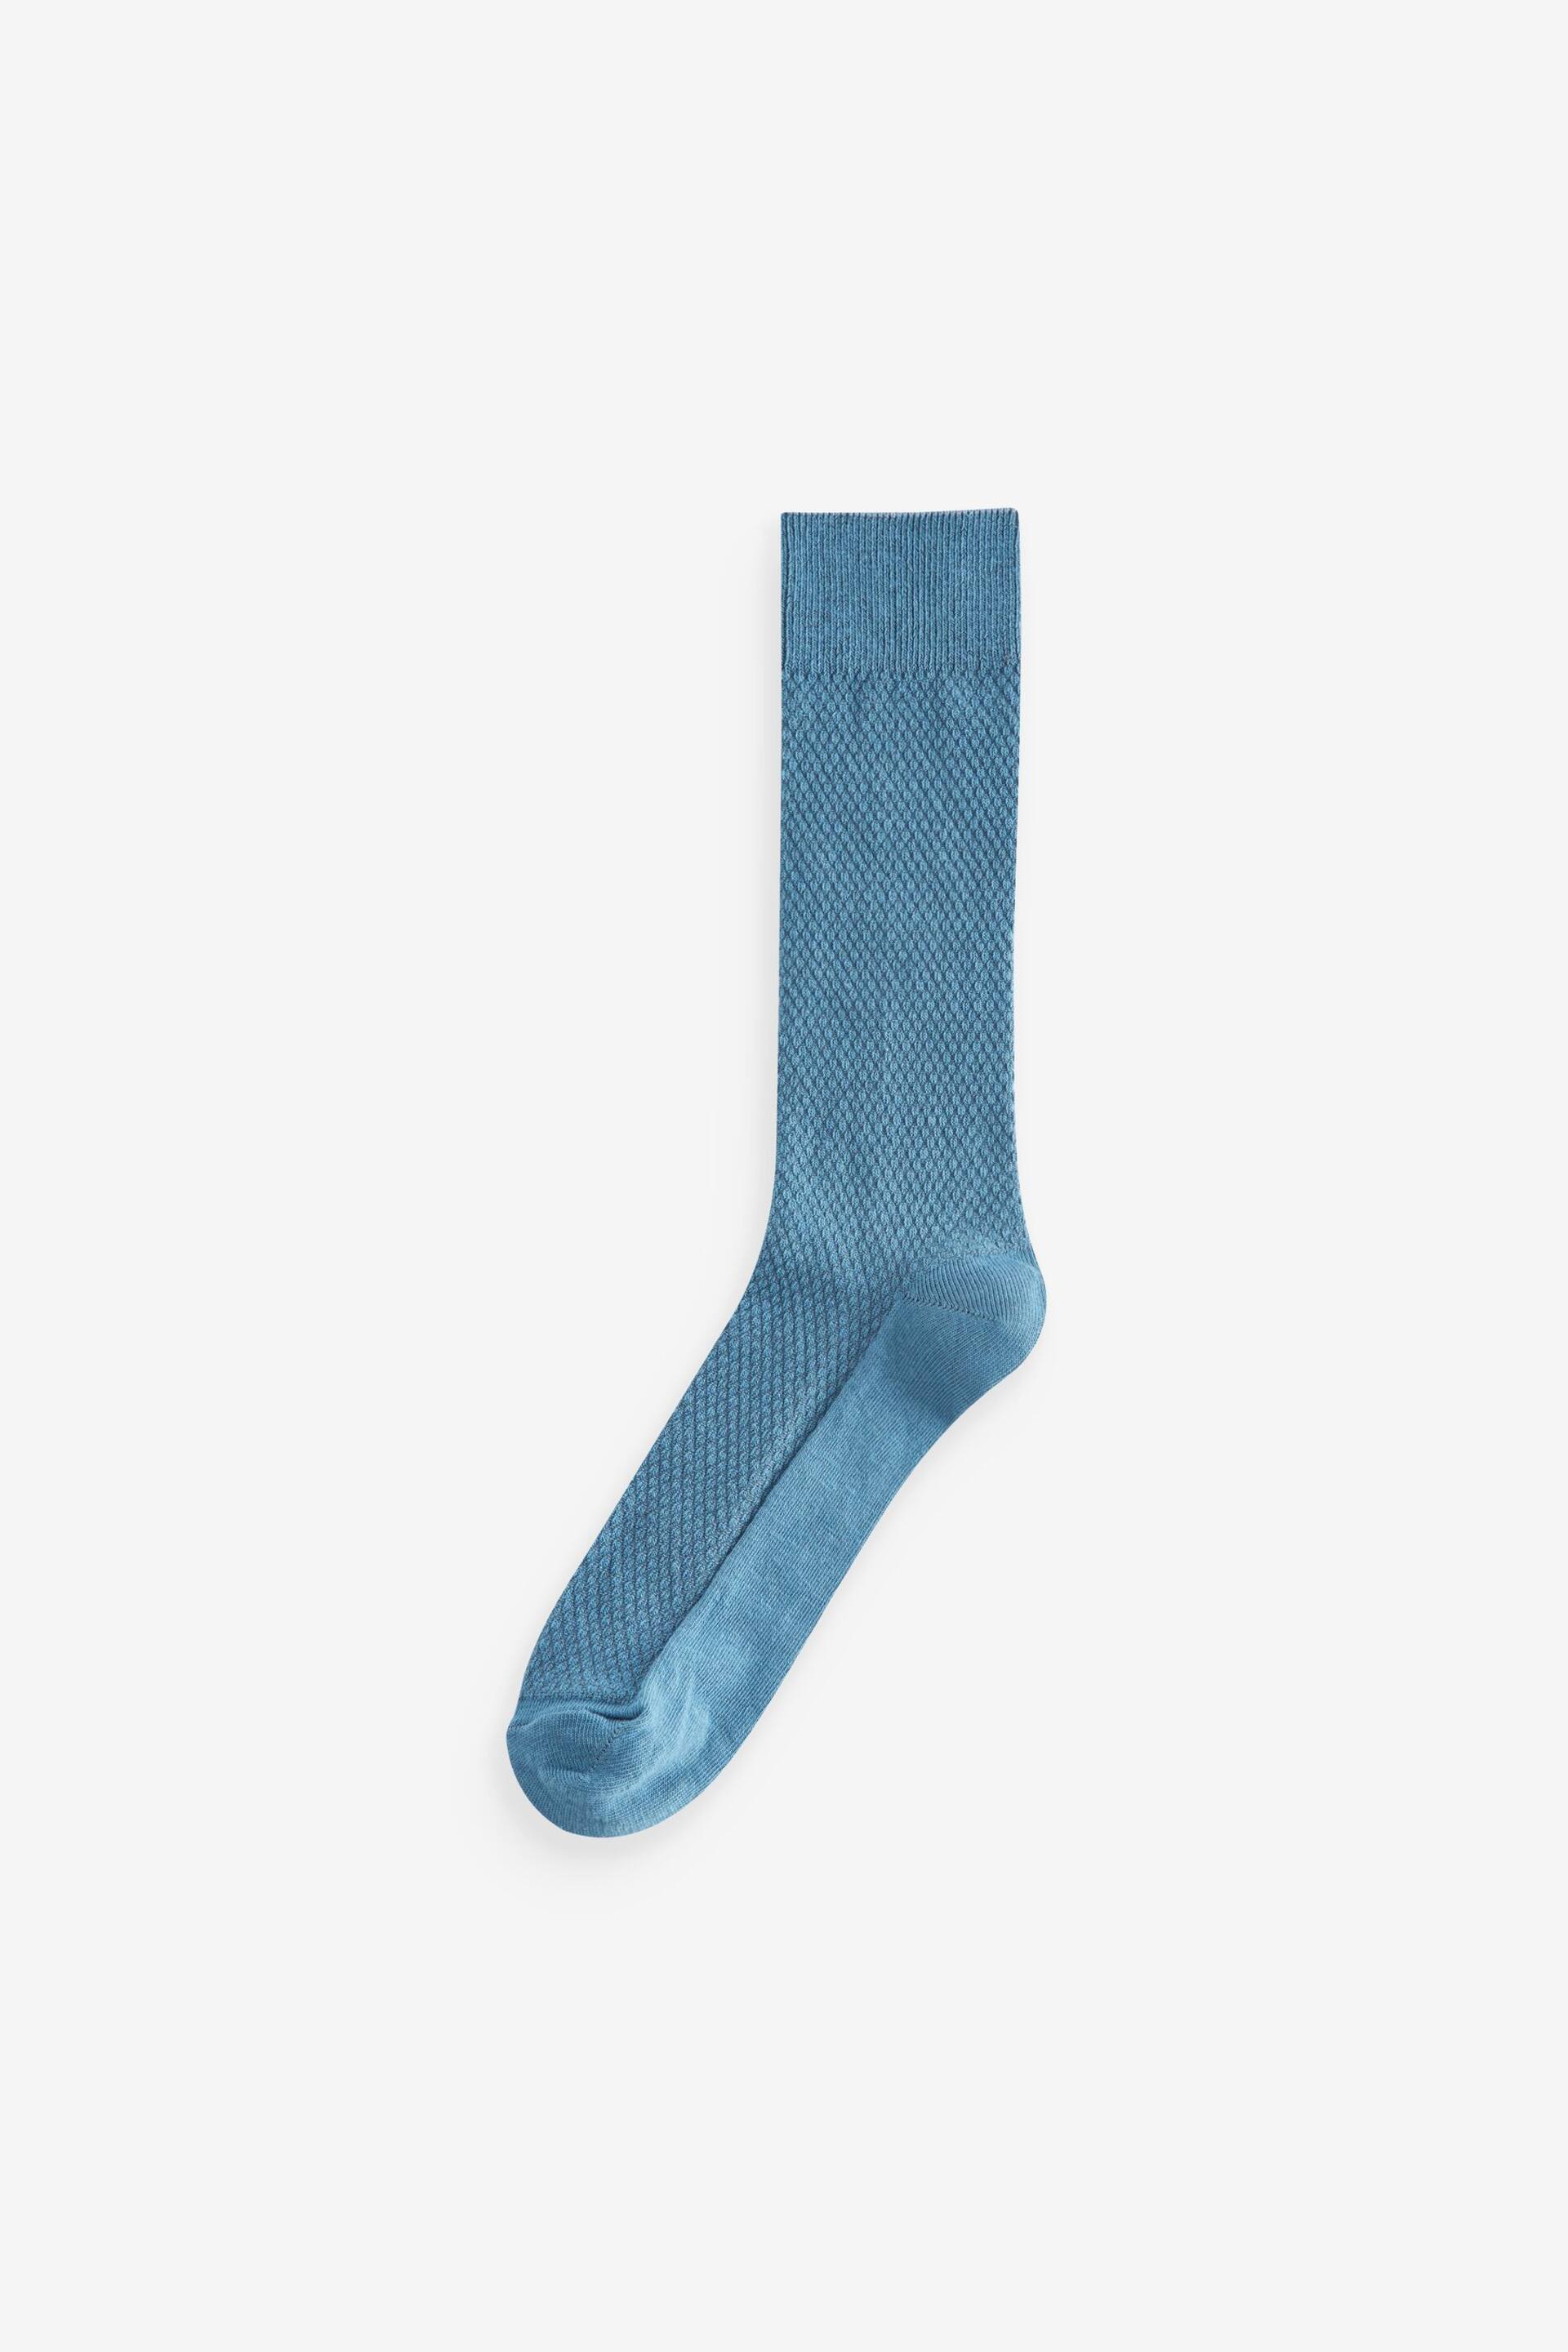 Blue/Green 5 Pack Lightweight Texture Socks - Image 6 of 6